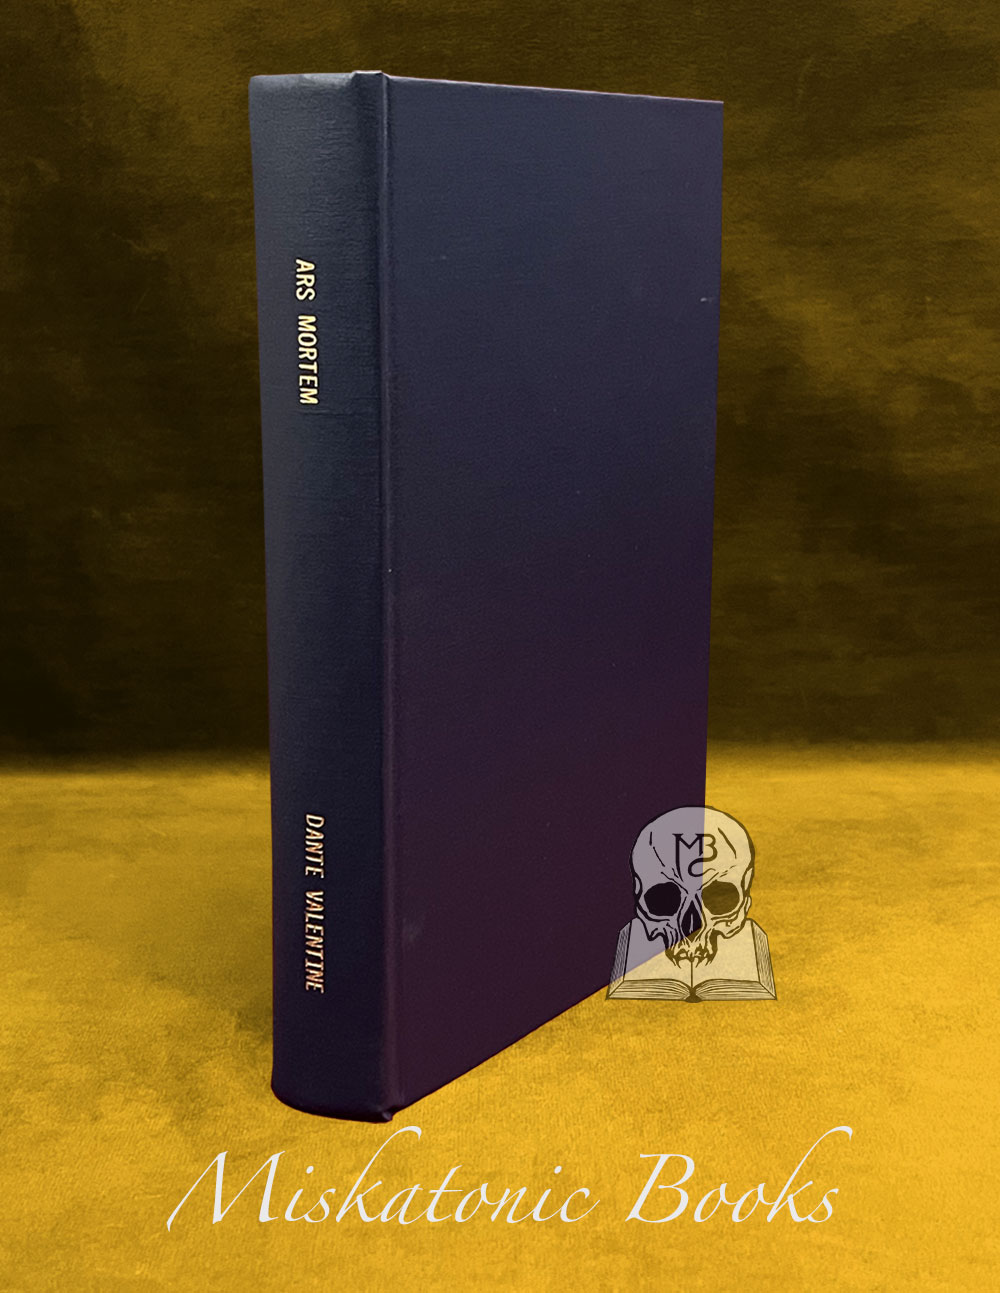 ARS MORTEM by Reverend Dante - 1st Edition Hardcover